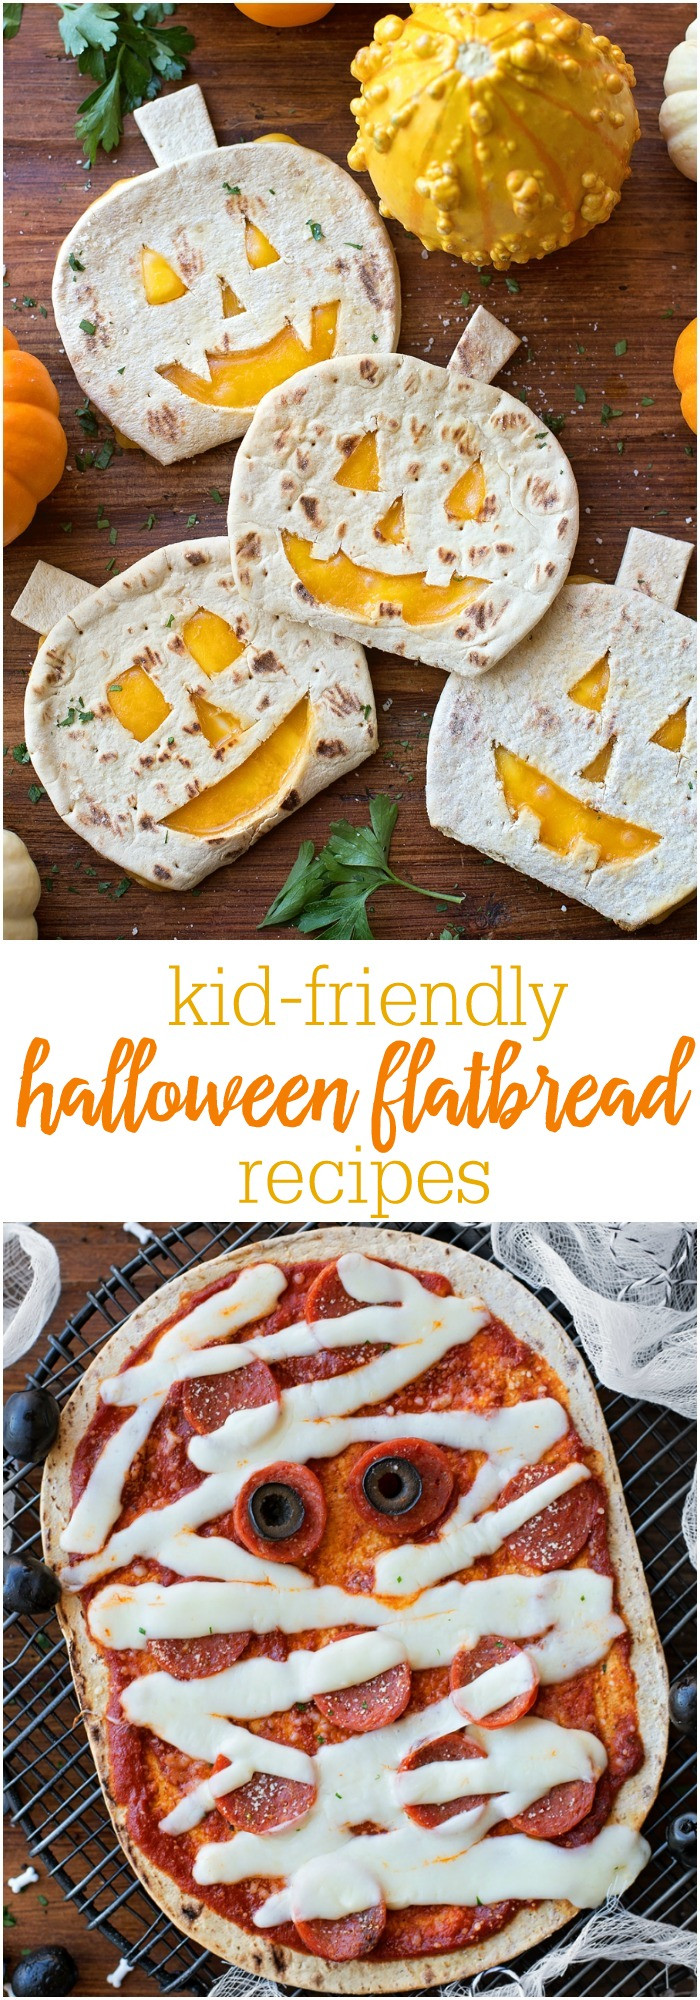 Halloween Pumpkin Recipes
 Flatbread Halloween Recipes Lil Luna